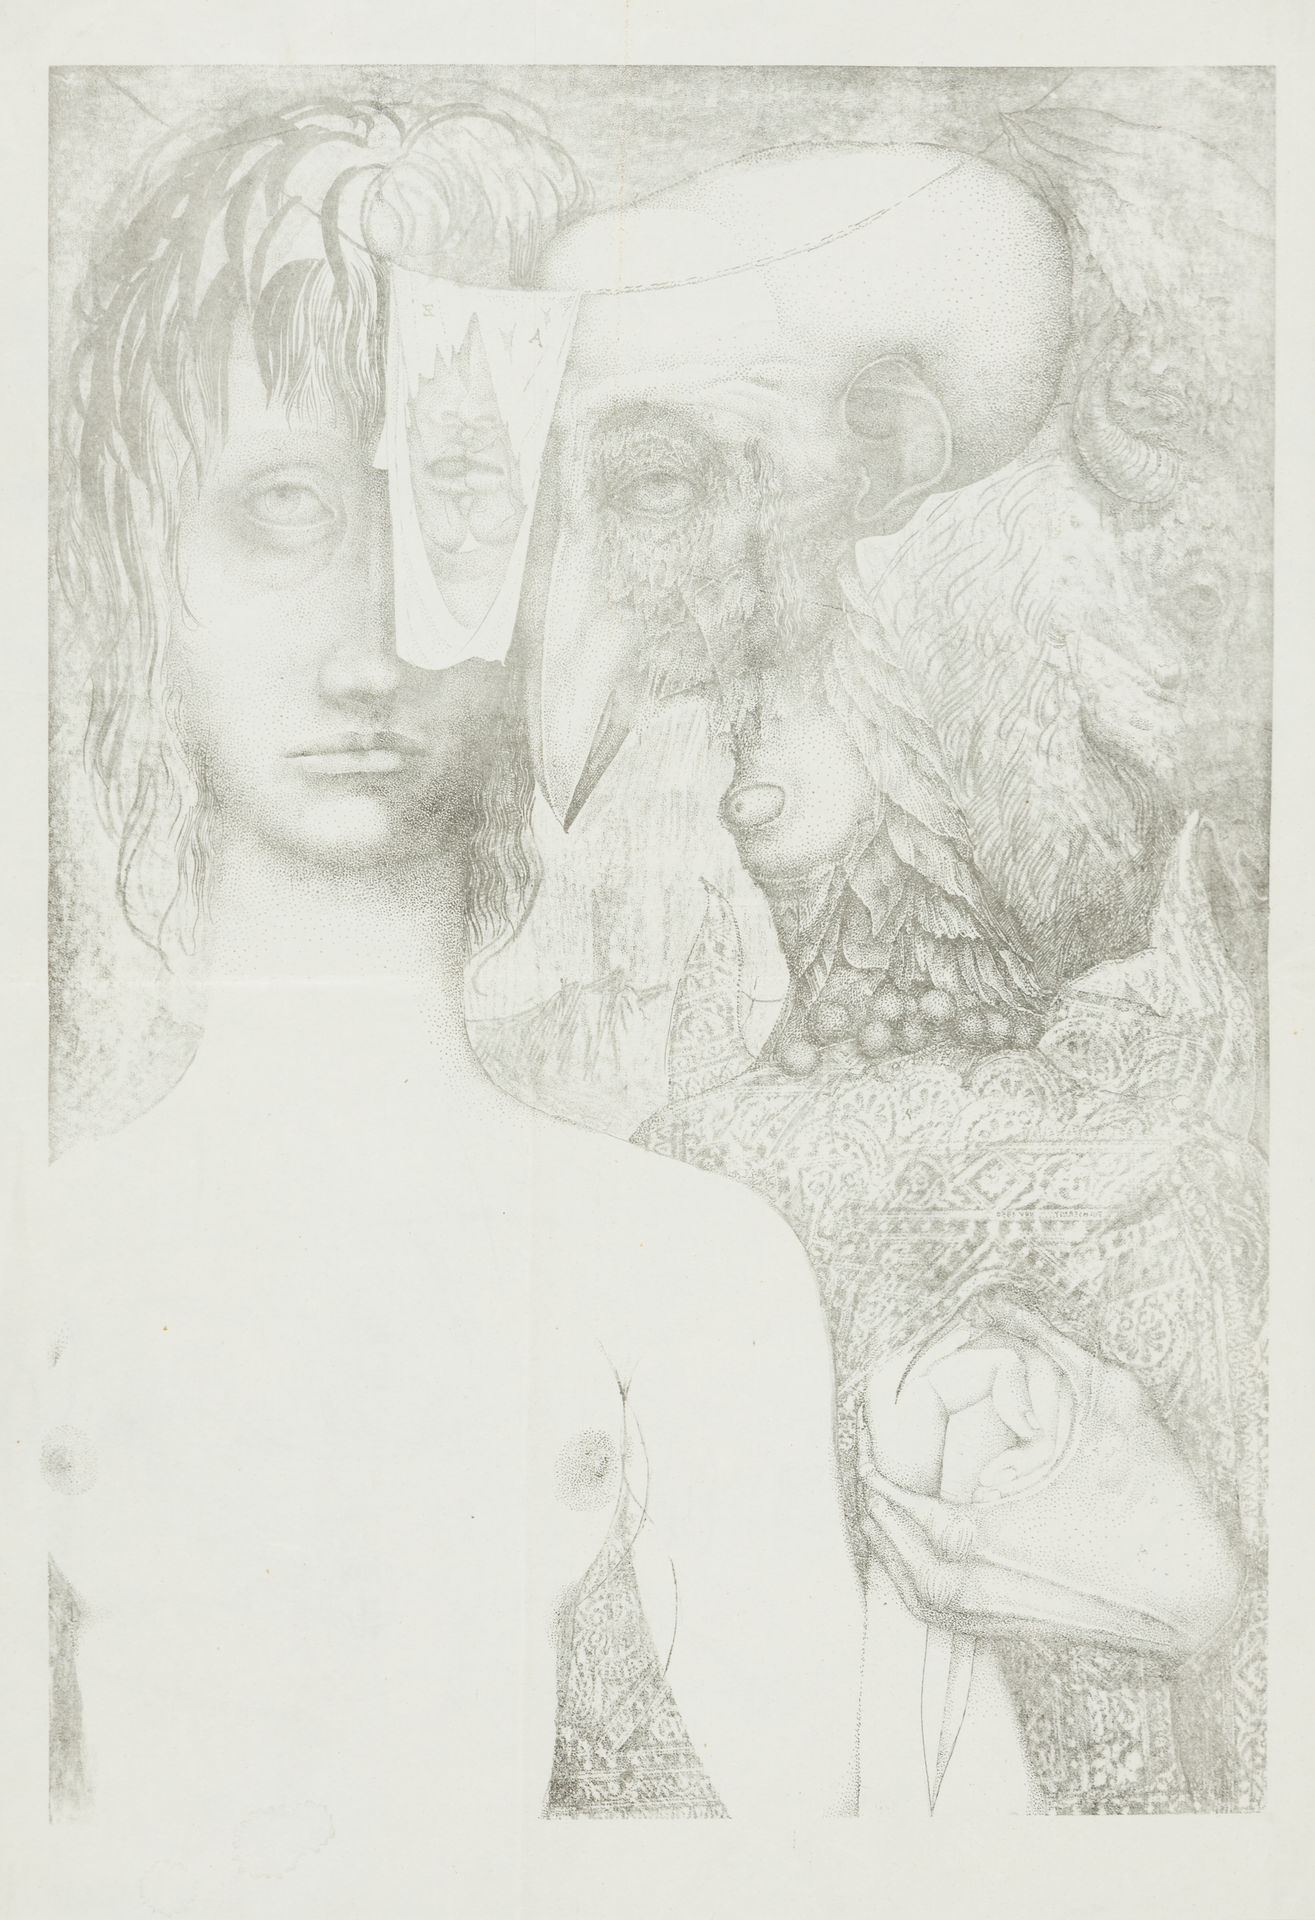 Fuchs, Ernst 被预防的露西娅》，1950年
纸上石版画
在版心右侧有签名
纸张尺寸47 x 32.4厘米，版式尺寸42.5 x 29.7厘米
有框架&hellip;